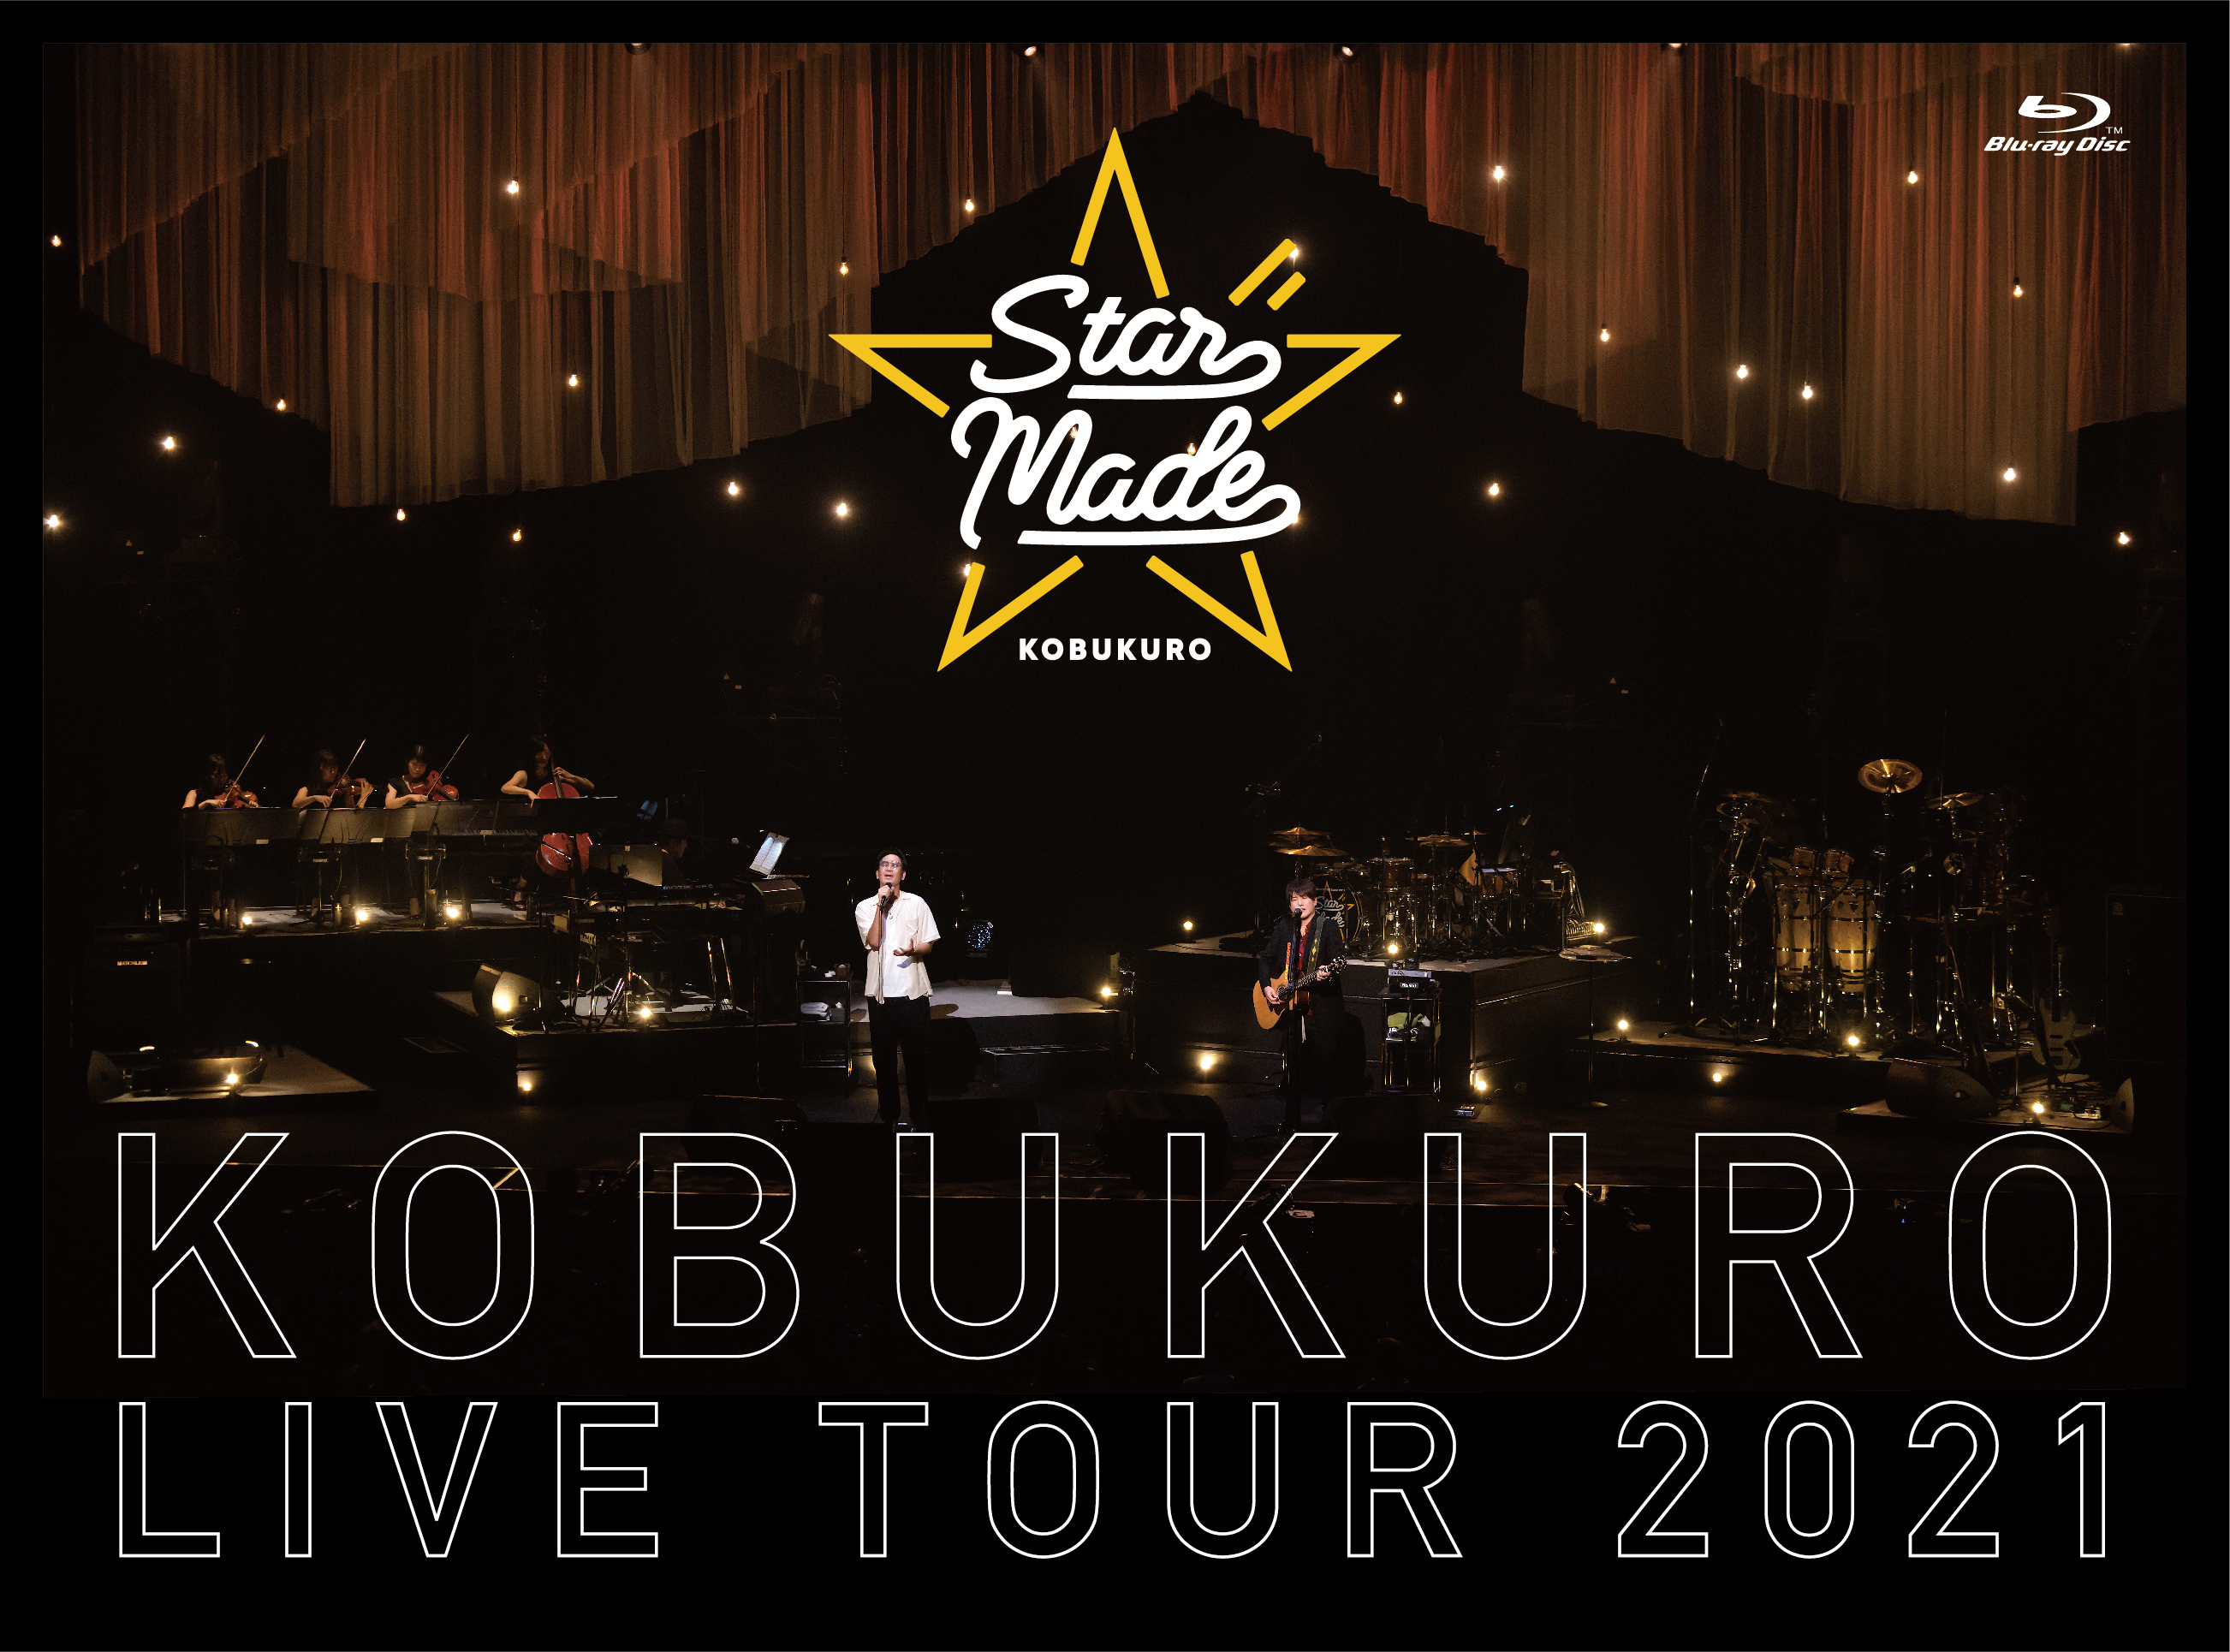 KOBUKURO LIVE TOUR 2021 "Star Made" at 東京ガーデンシアター（ファンサイト会員限定盤 Blu-ray）